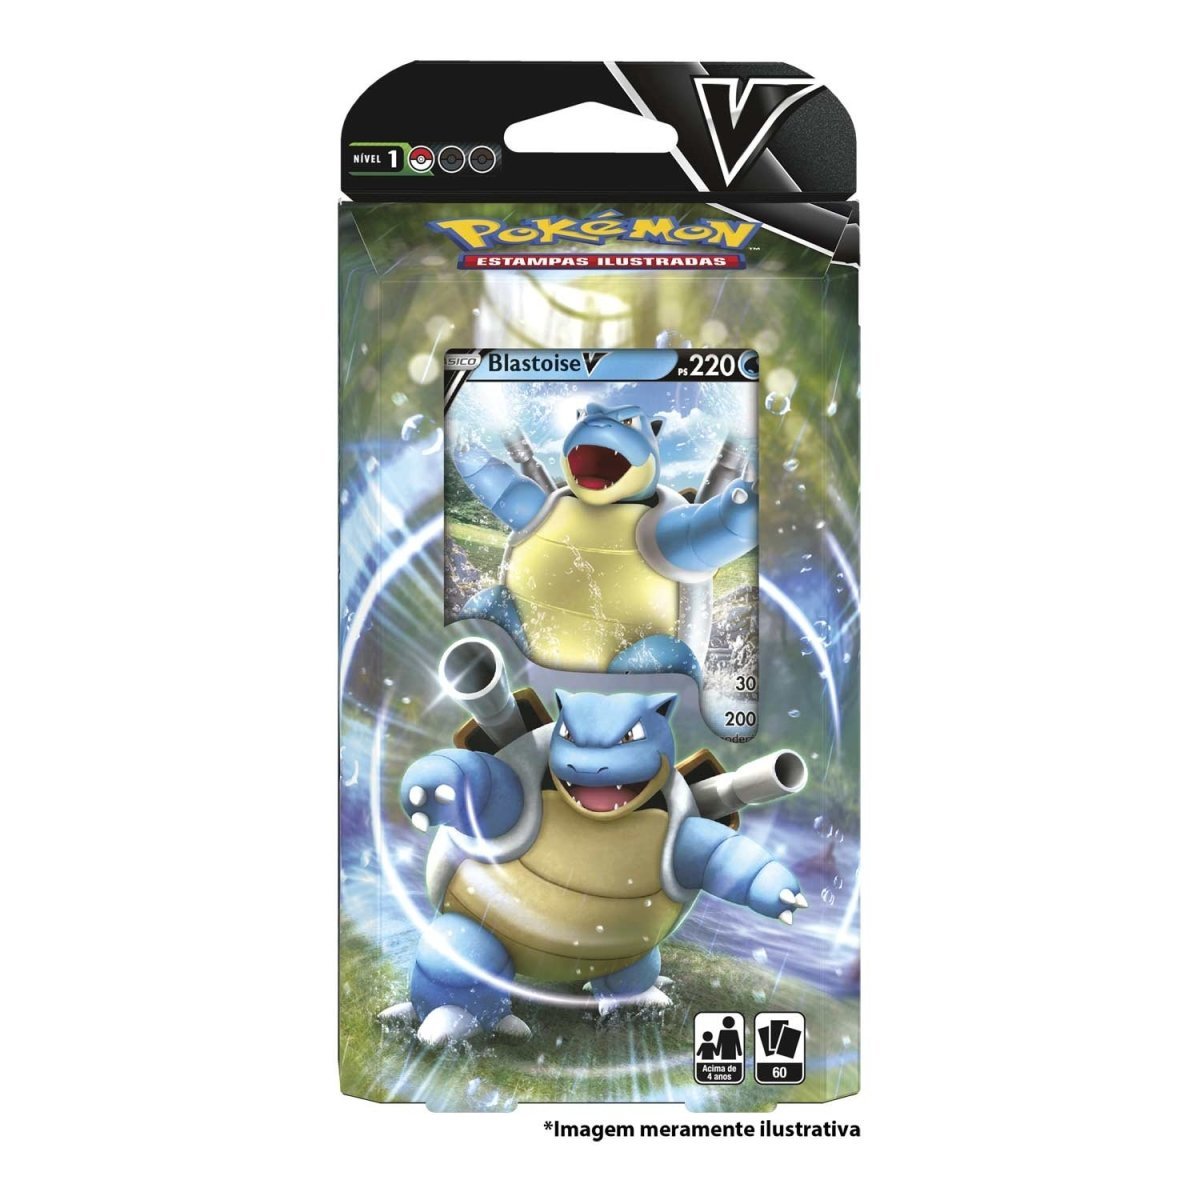 Pokémon TCG: Blastoise V Battle Deck - PokeRvm